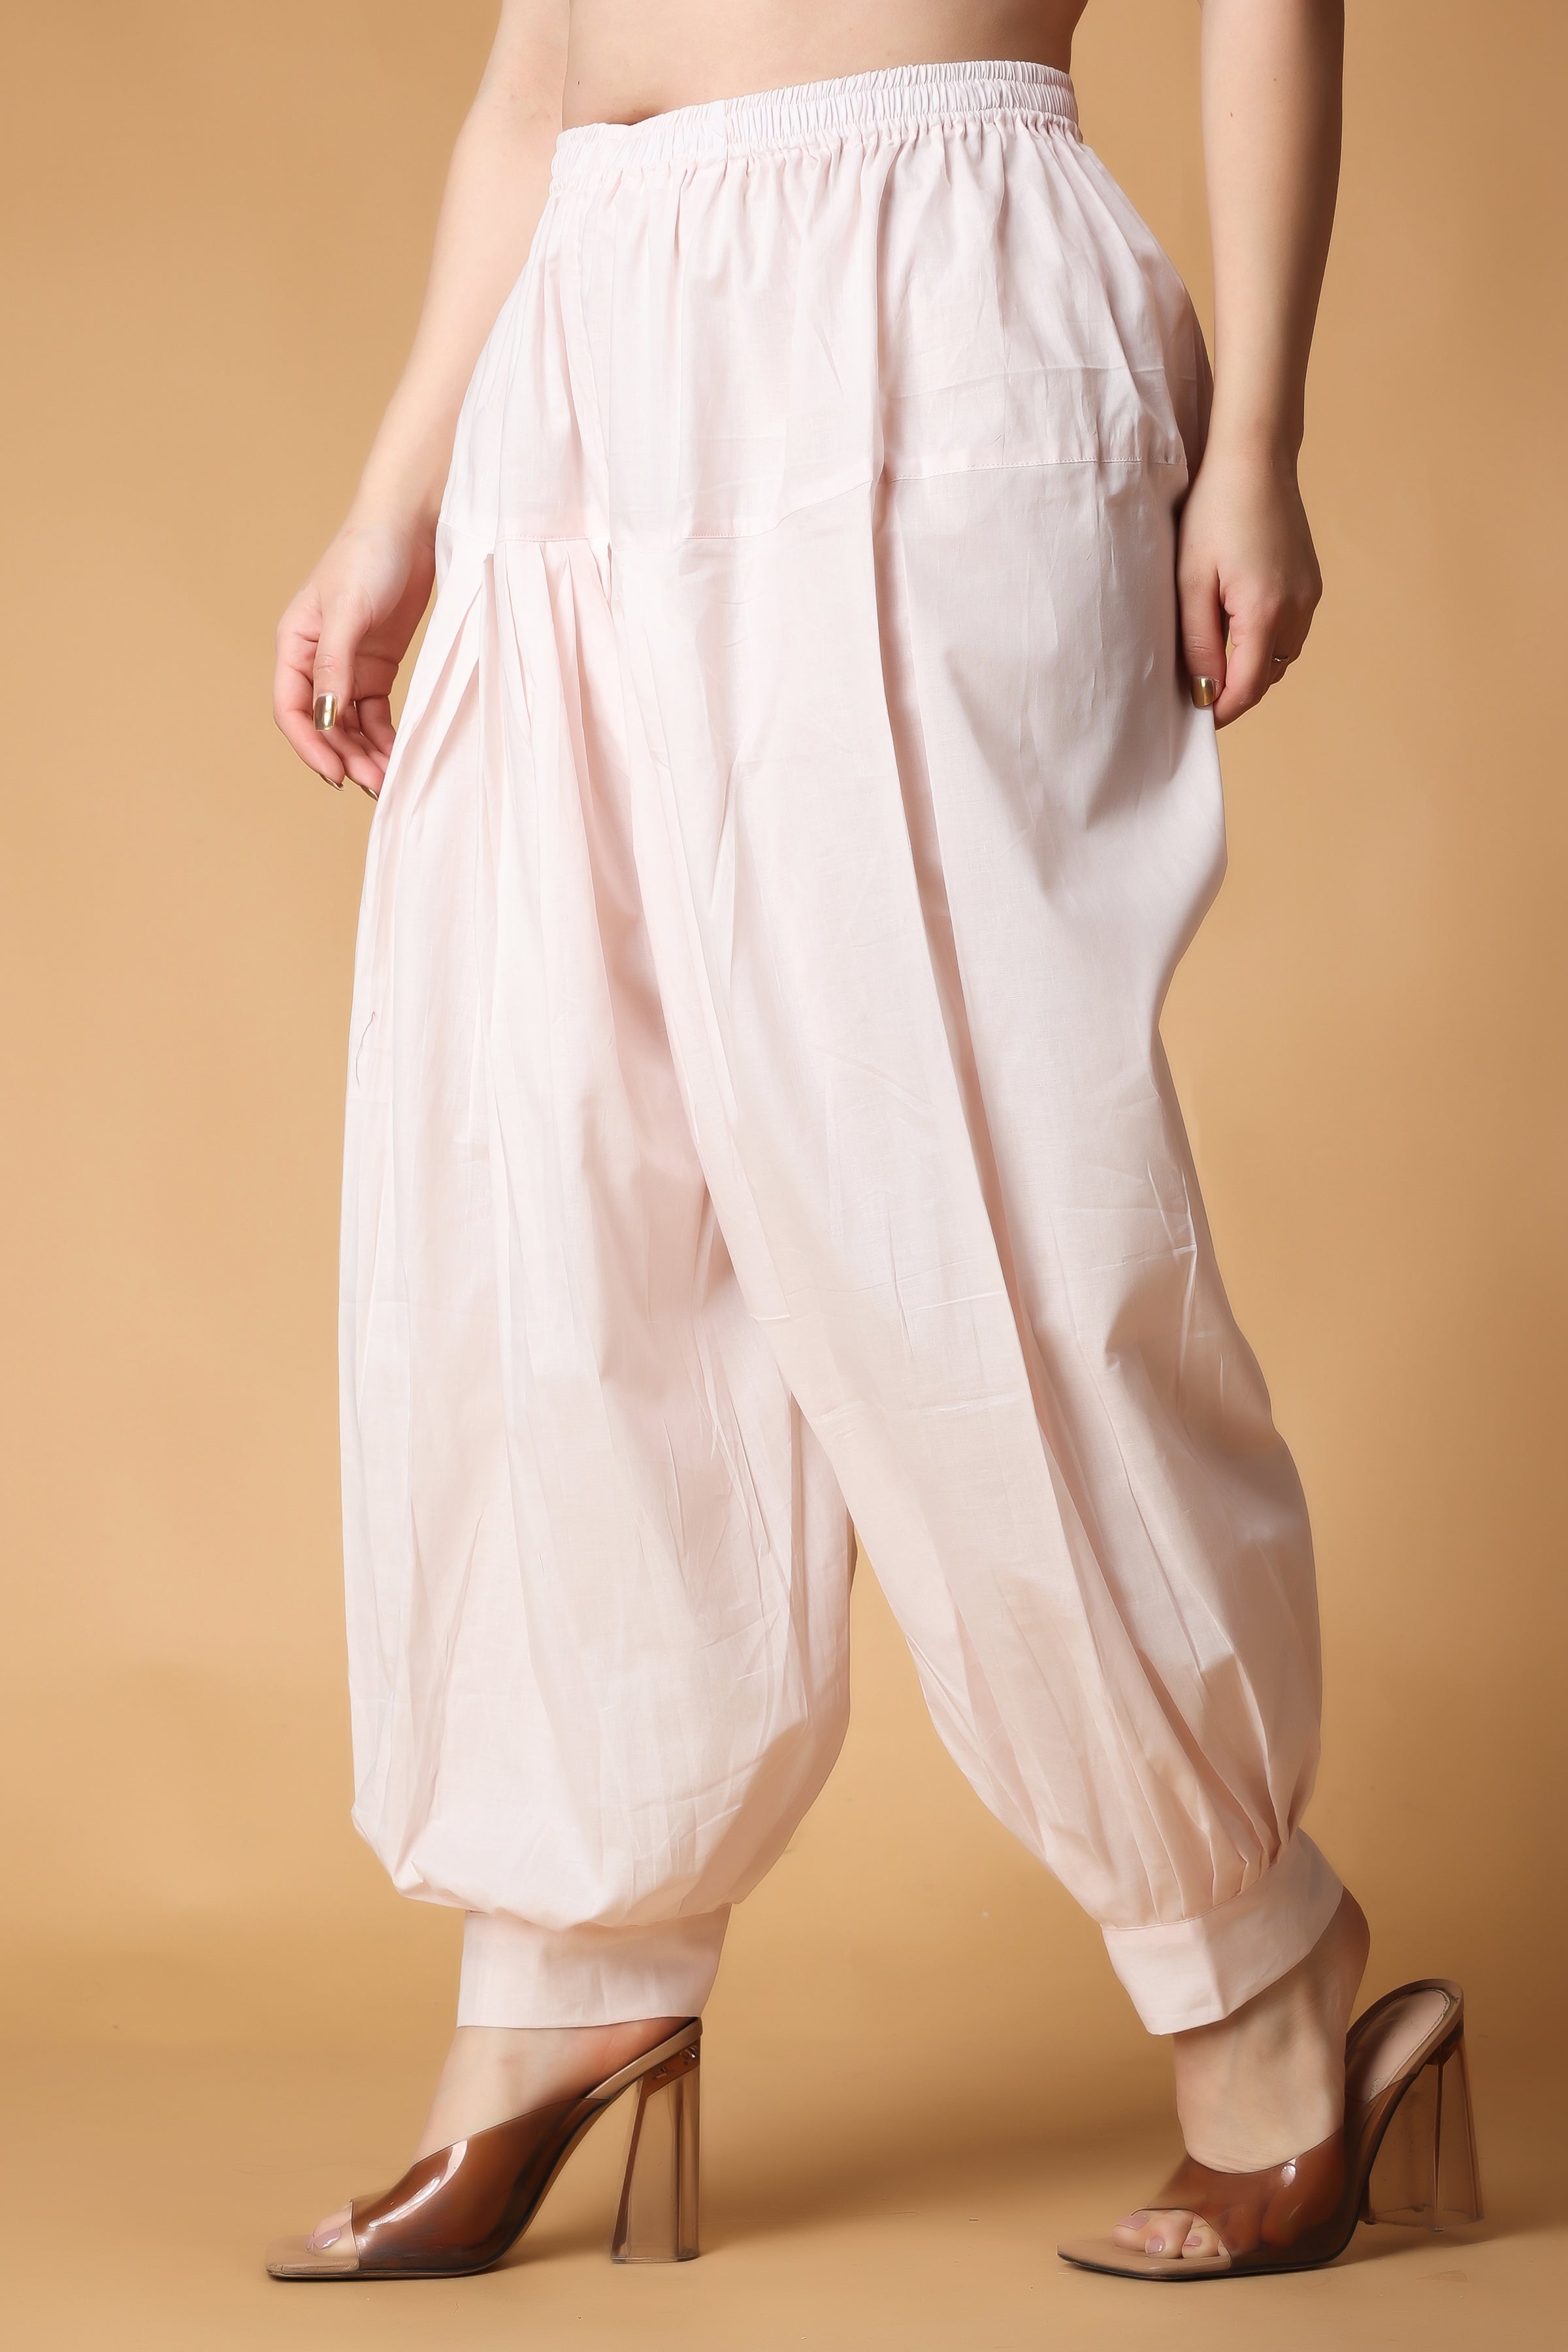 Buy Plus Size Afghani Salwar & Salwar Pants For Ladies -Apella